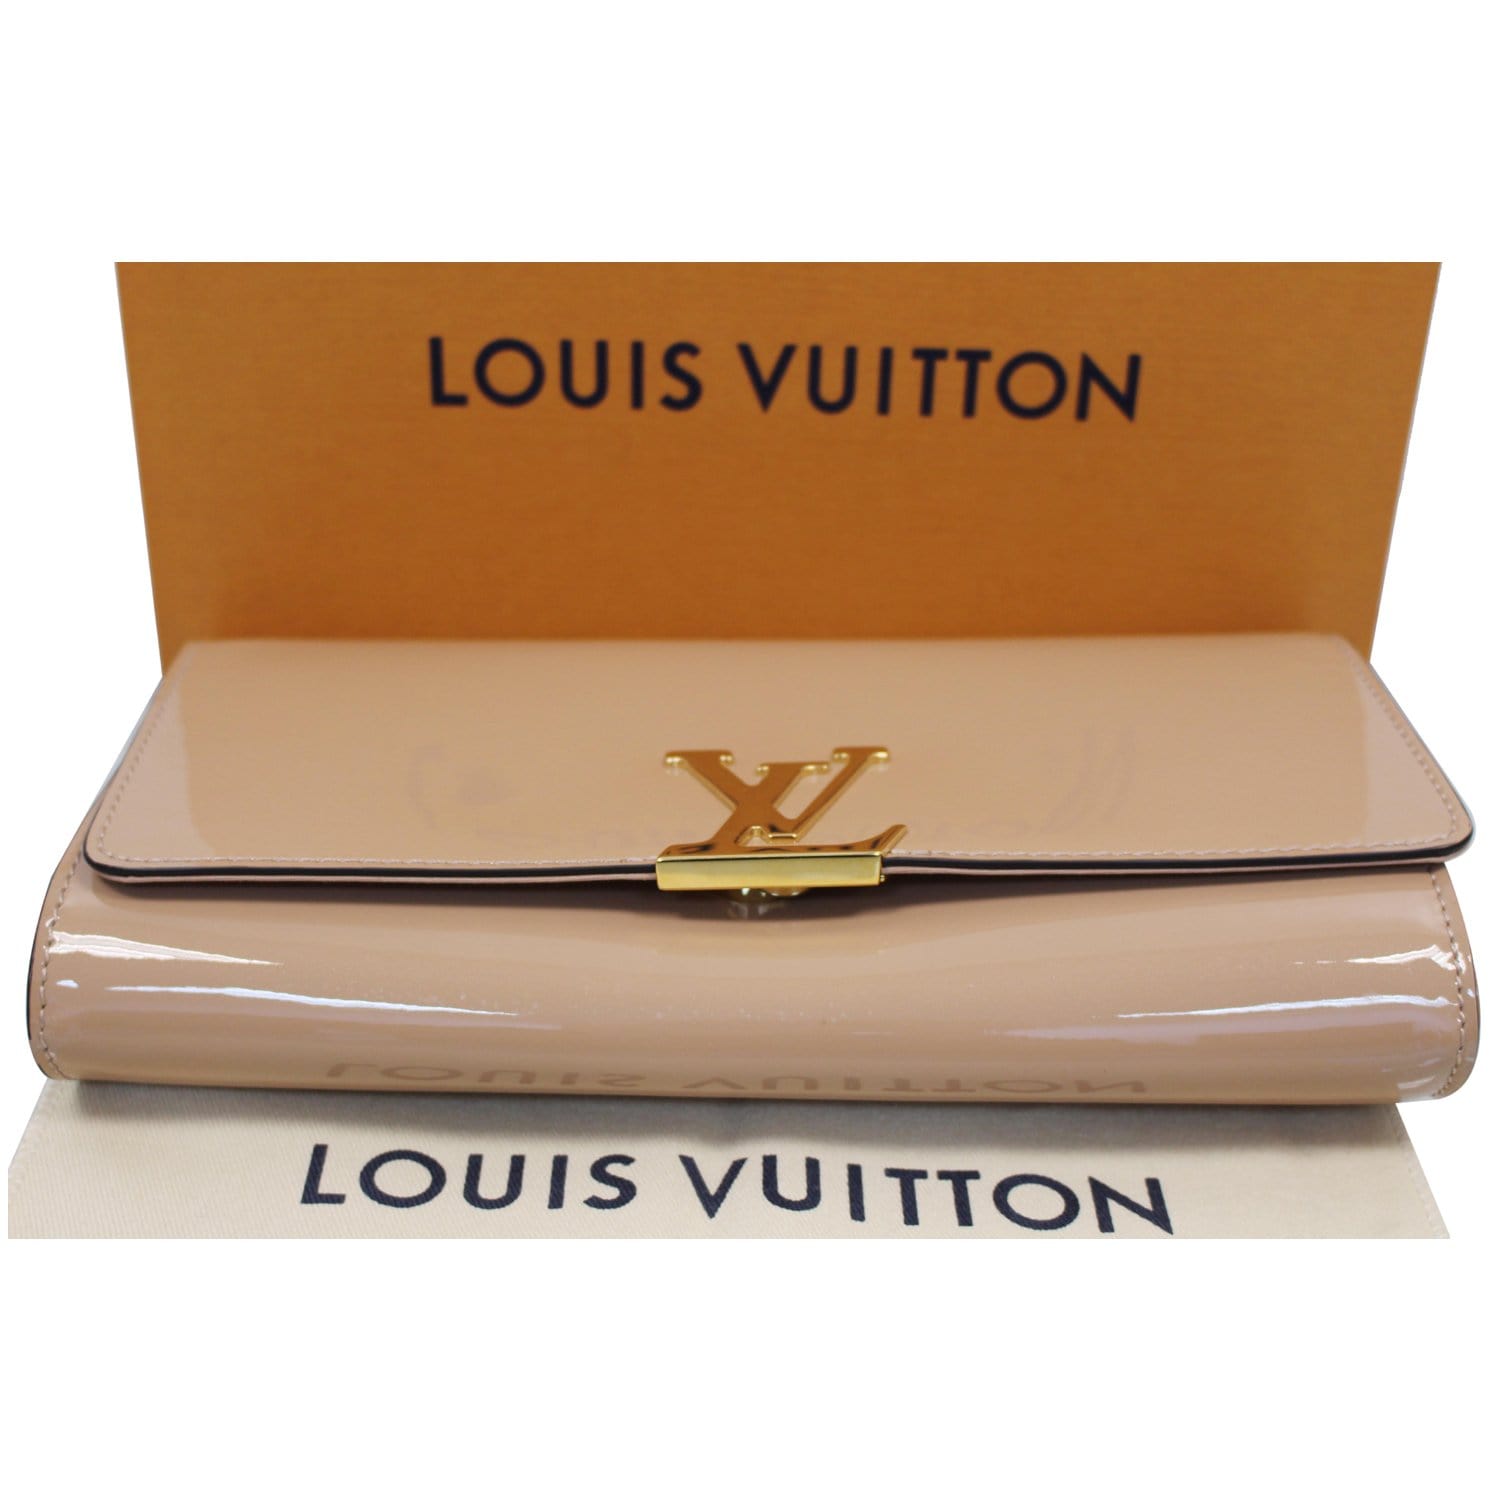 Technapology on Instagram: “Louis Vuitton Women Leather Wallets 😈”